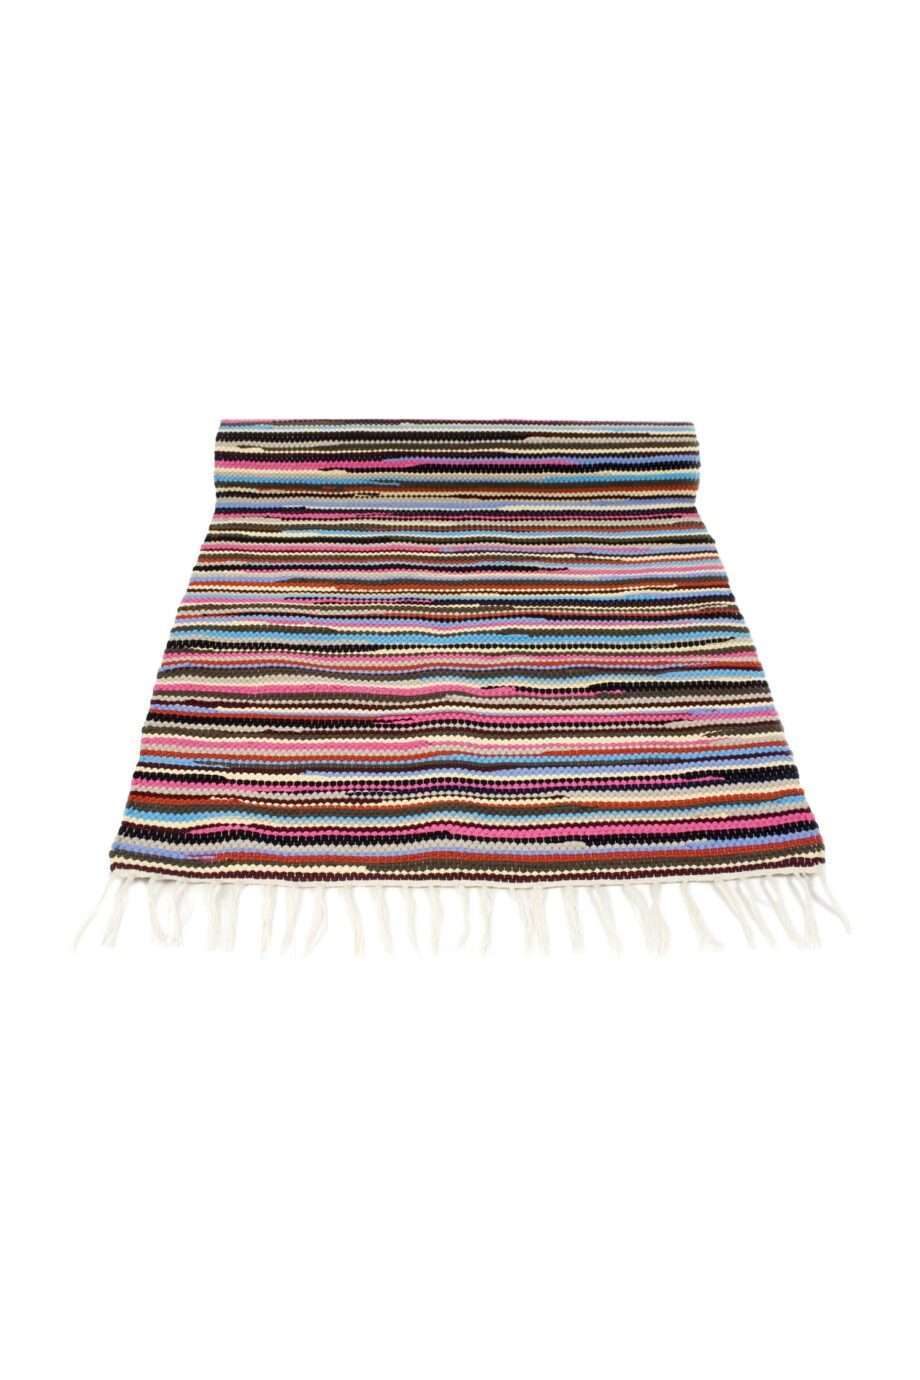 stripy mixmatch woven cotton rug